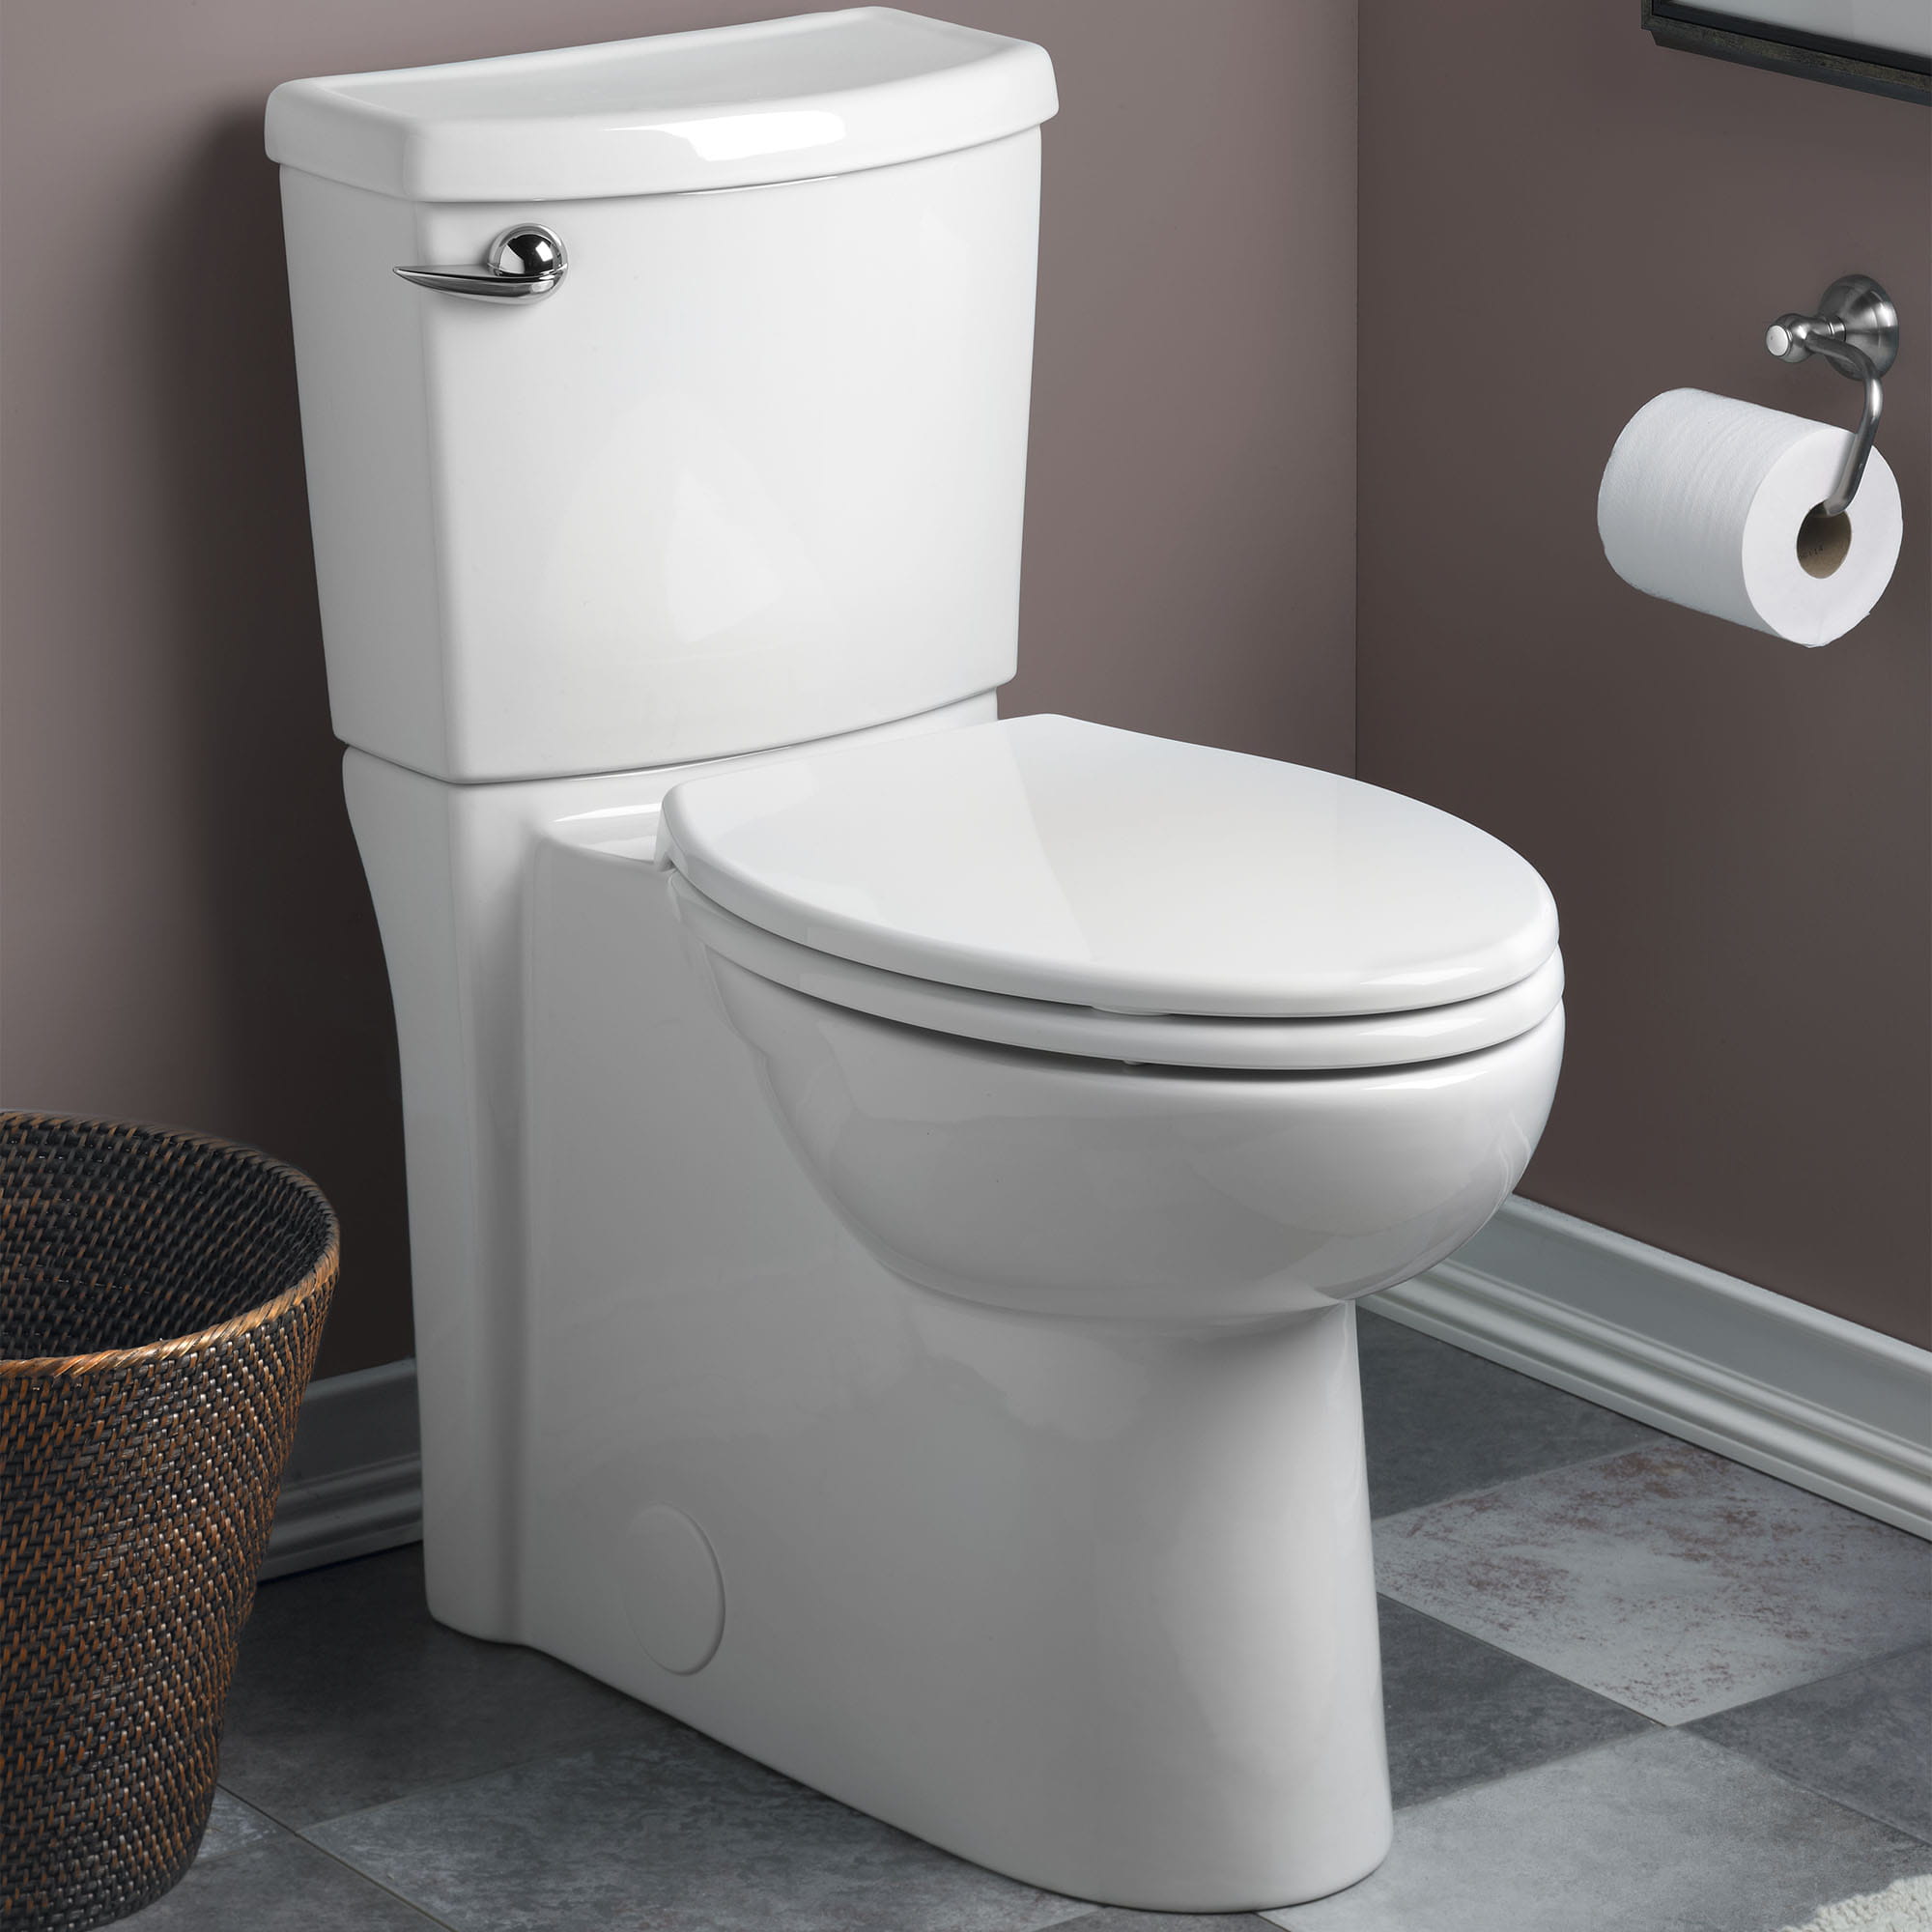 American Standard Cadet 3flowise 2-piece 1.28gpf HighEfficiency Elongated Toilet for sale online 